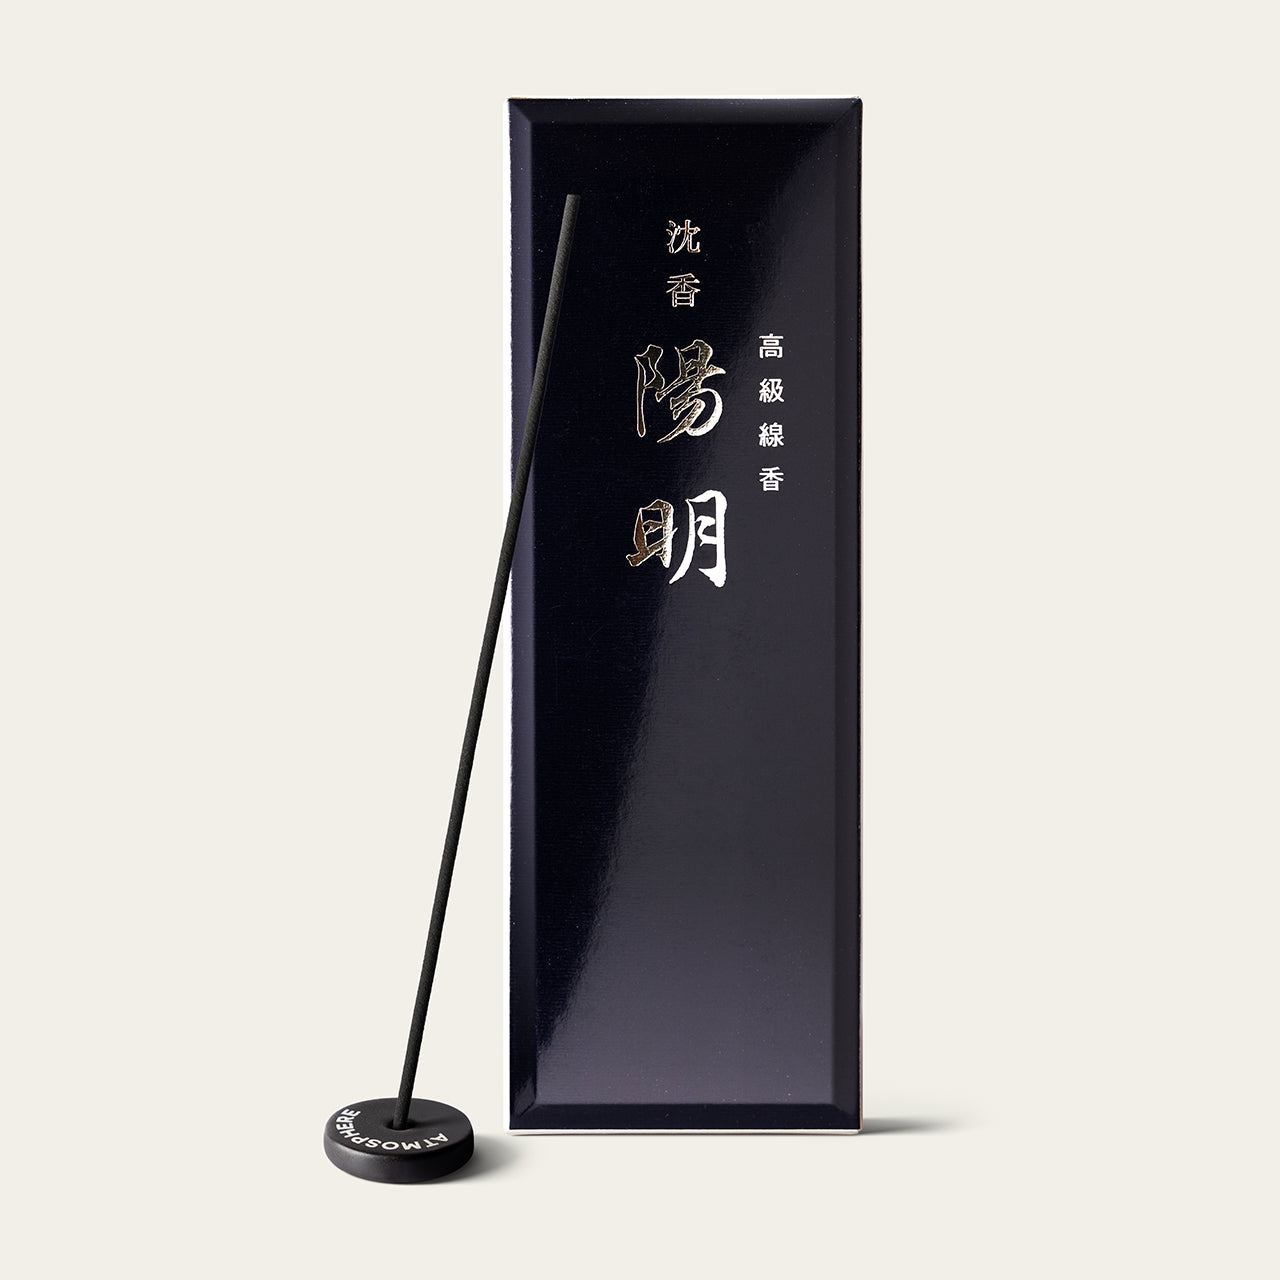 Gyokushodo Jinko Yomei Agarwood Clarity Japanese incense sticks (25 sticks) with Atmosphere ceramic incense holder